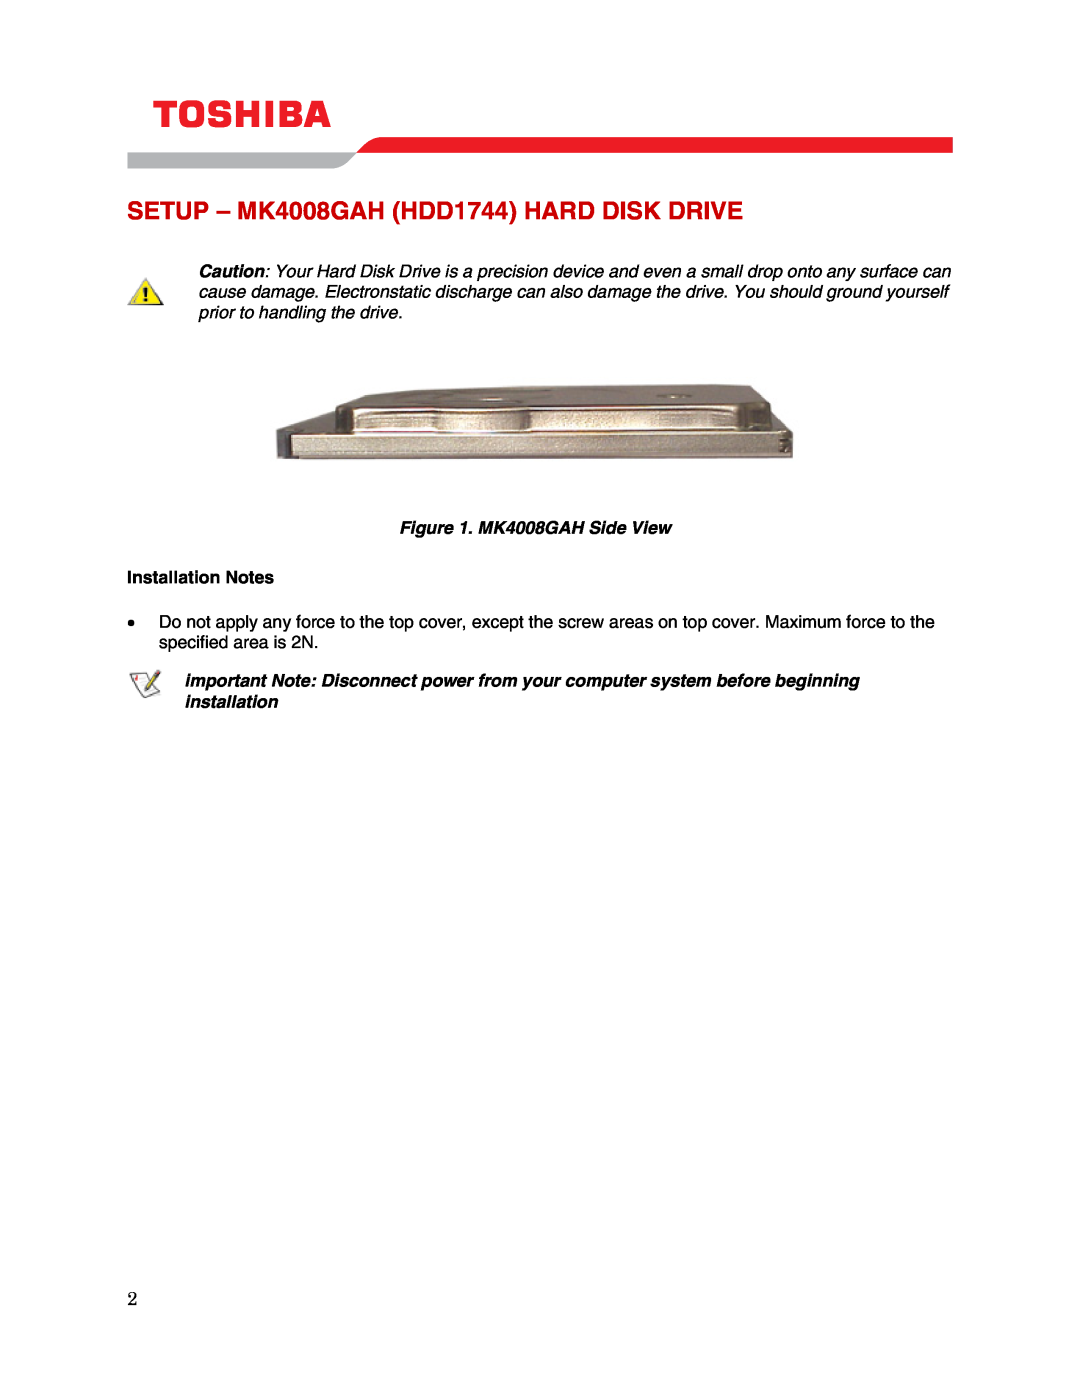 Toshiba user manual SETUP - MK4008GAH HDD1744 HARD DISK DRIVE, MK4008GAH Side View, Installation Notes 